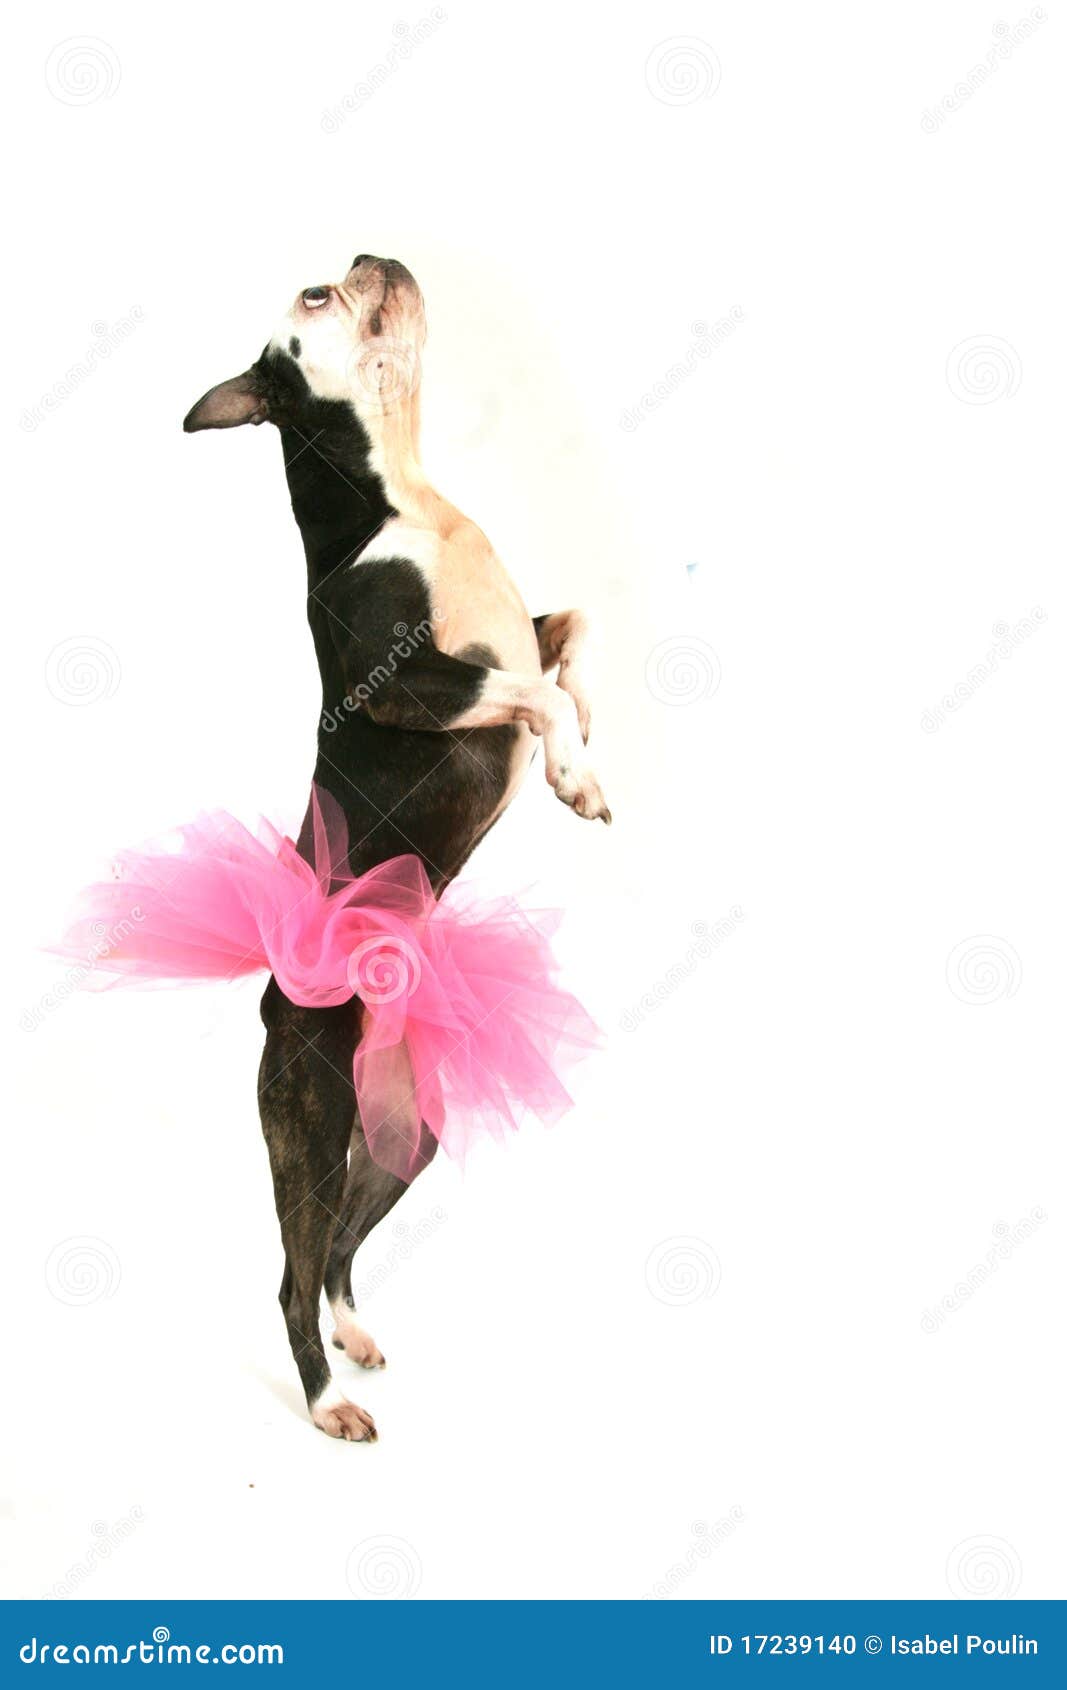 boston terrier with pink tutu